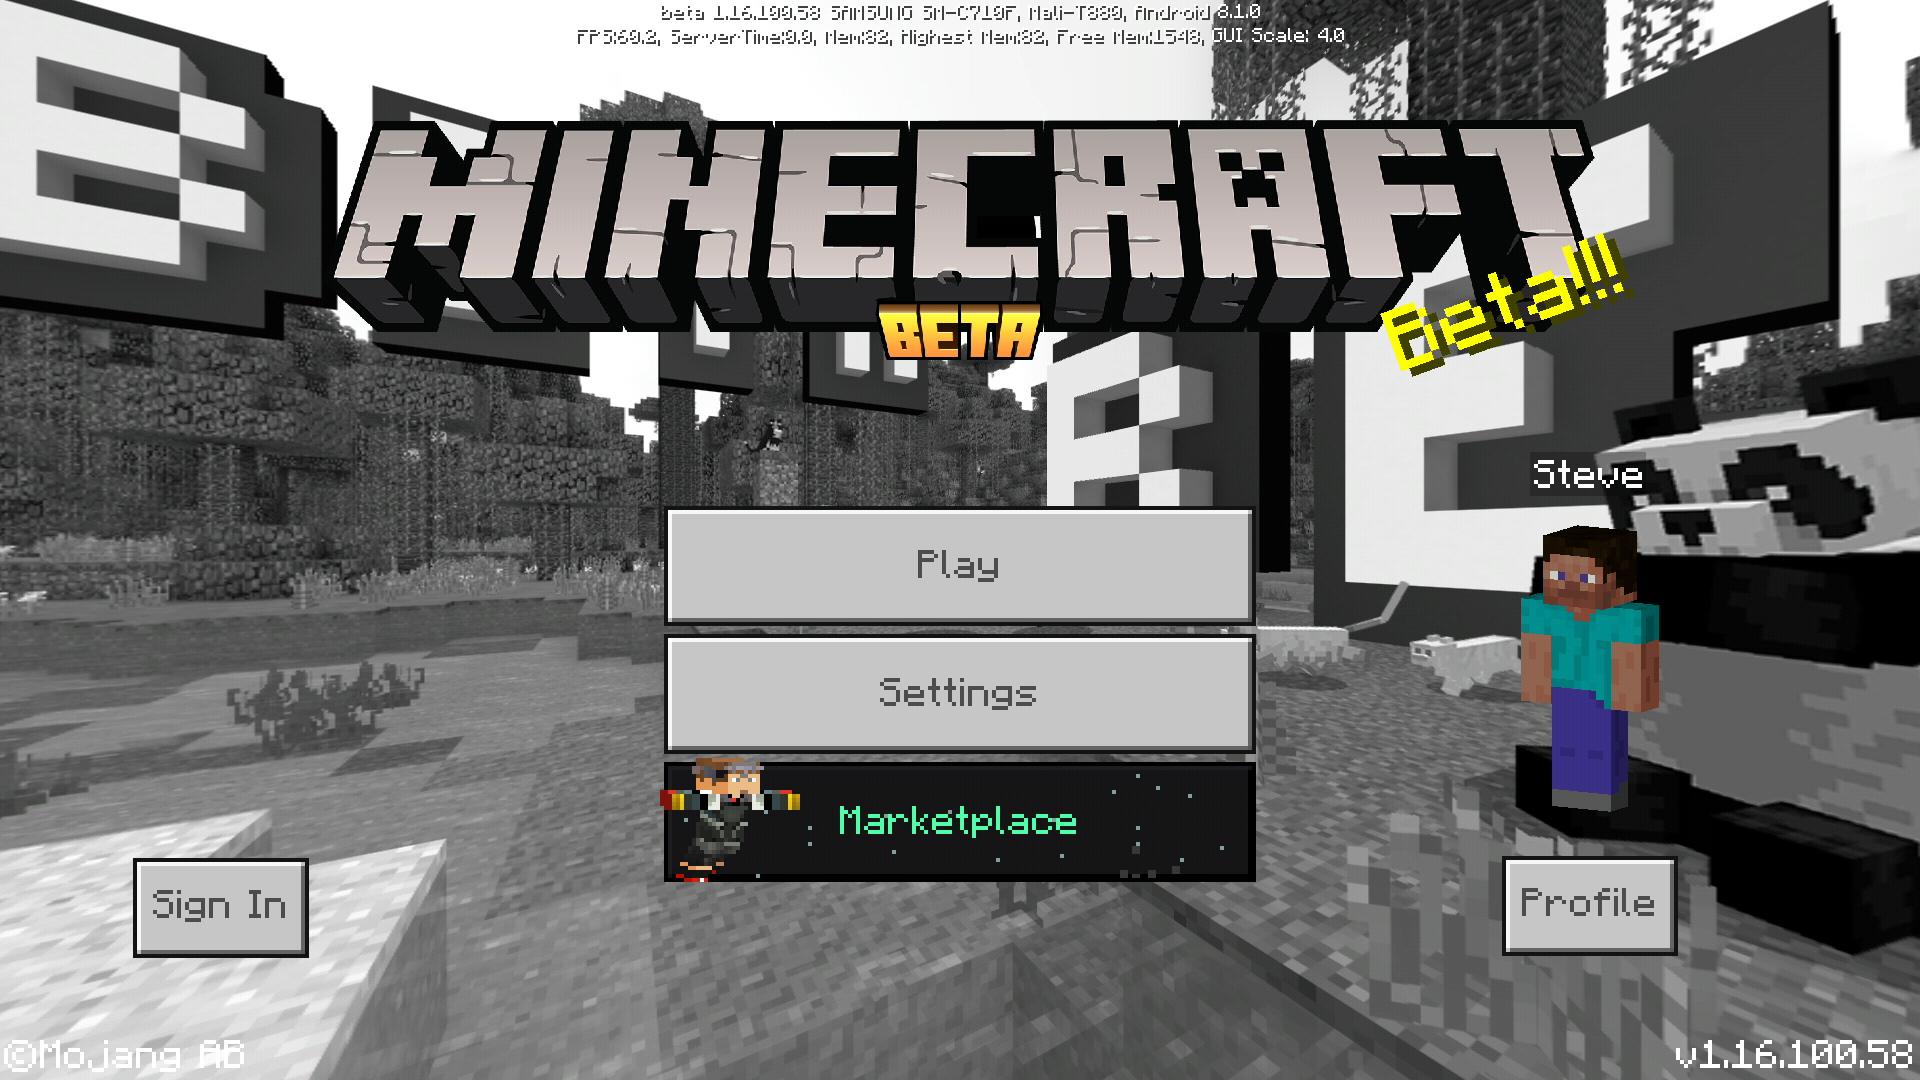 Download free Minecraft 1.16.100.50 Bedrock